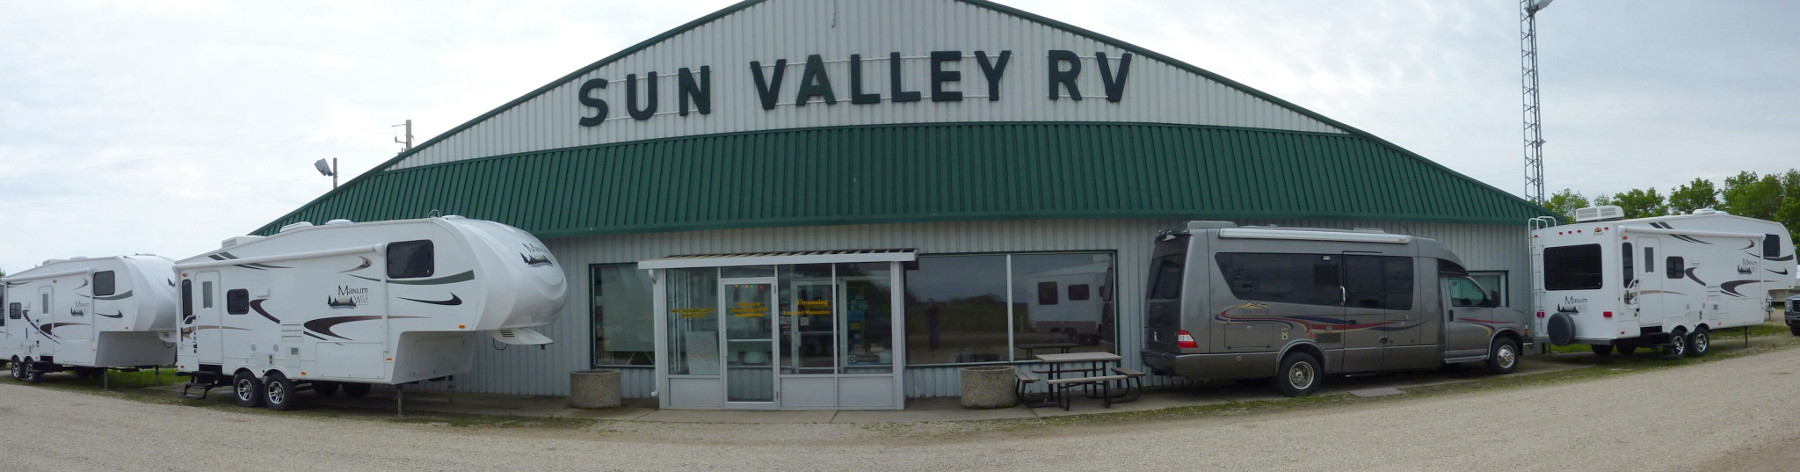 Sun Valley RV, Stanley, Manitoba